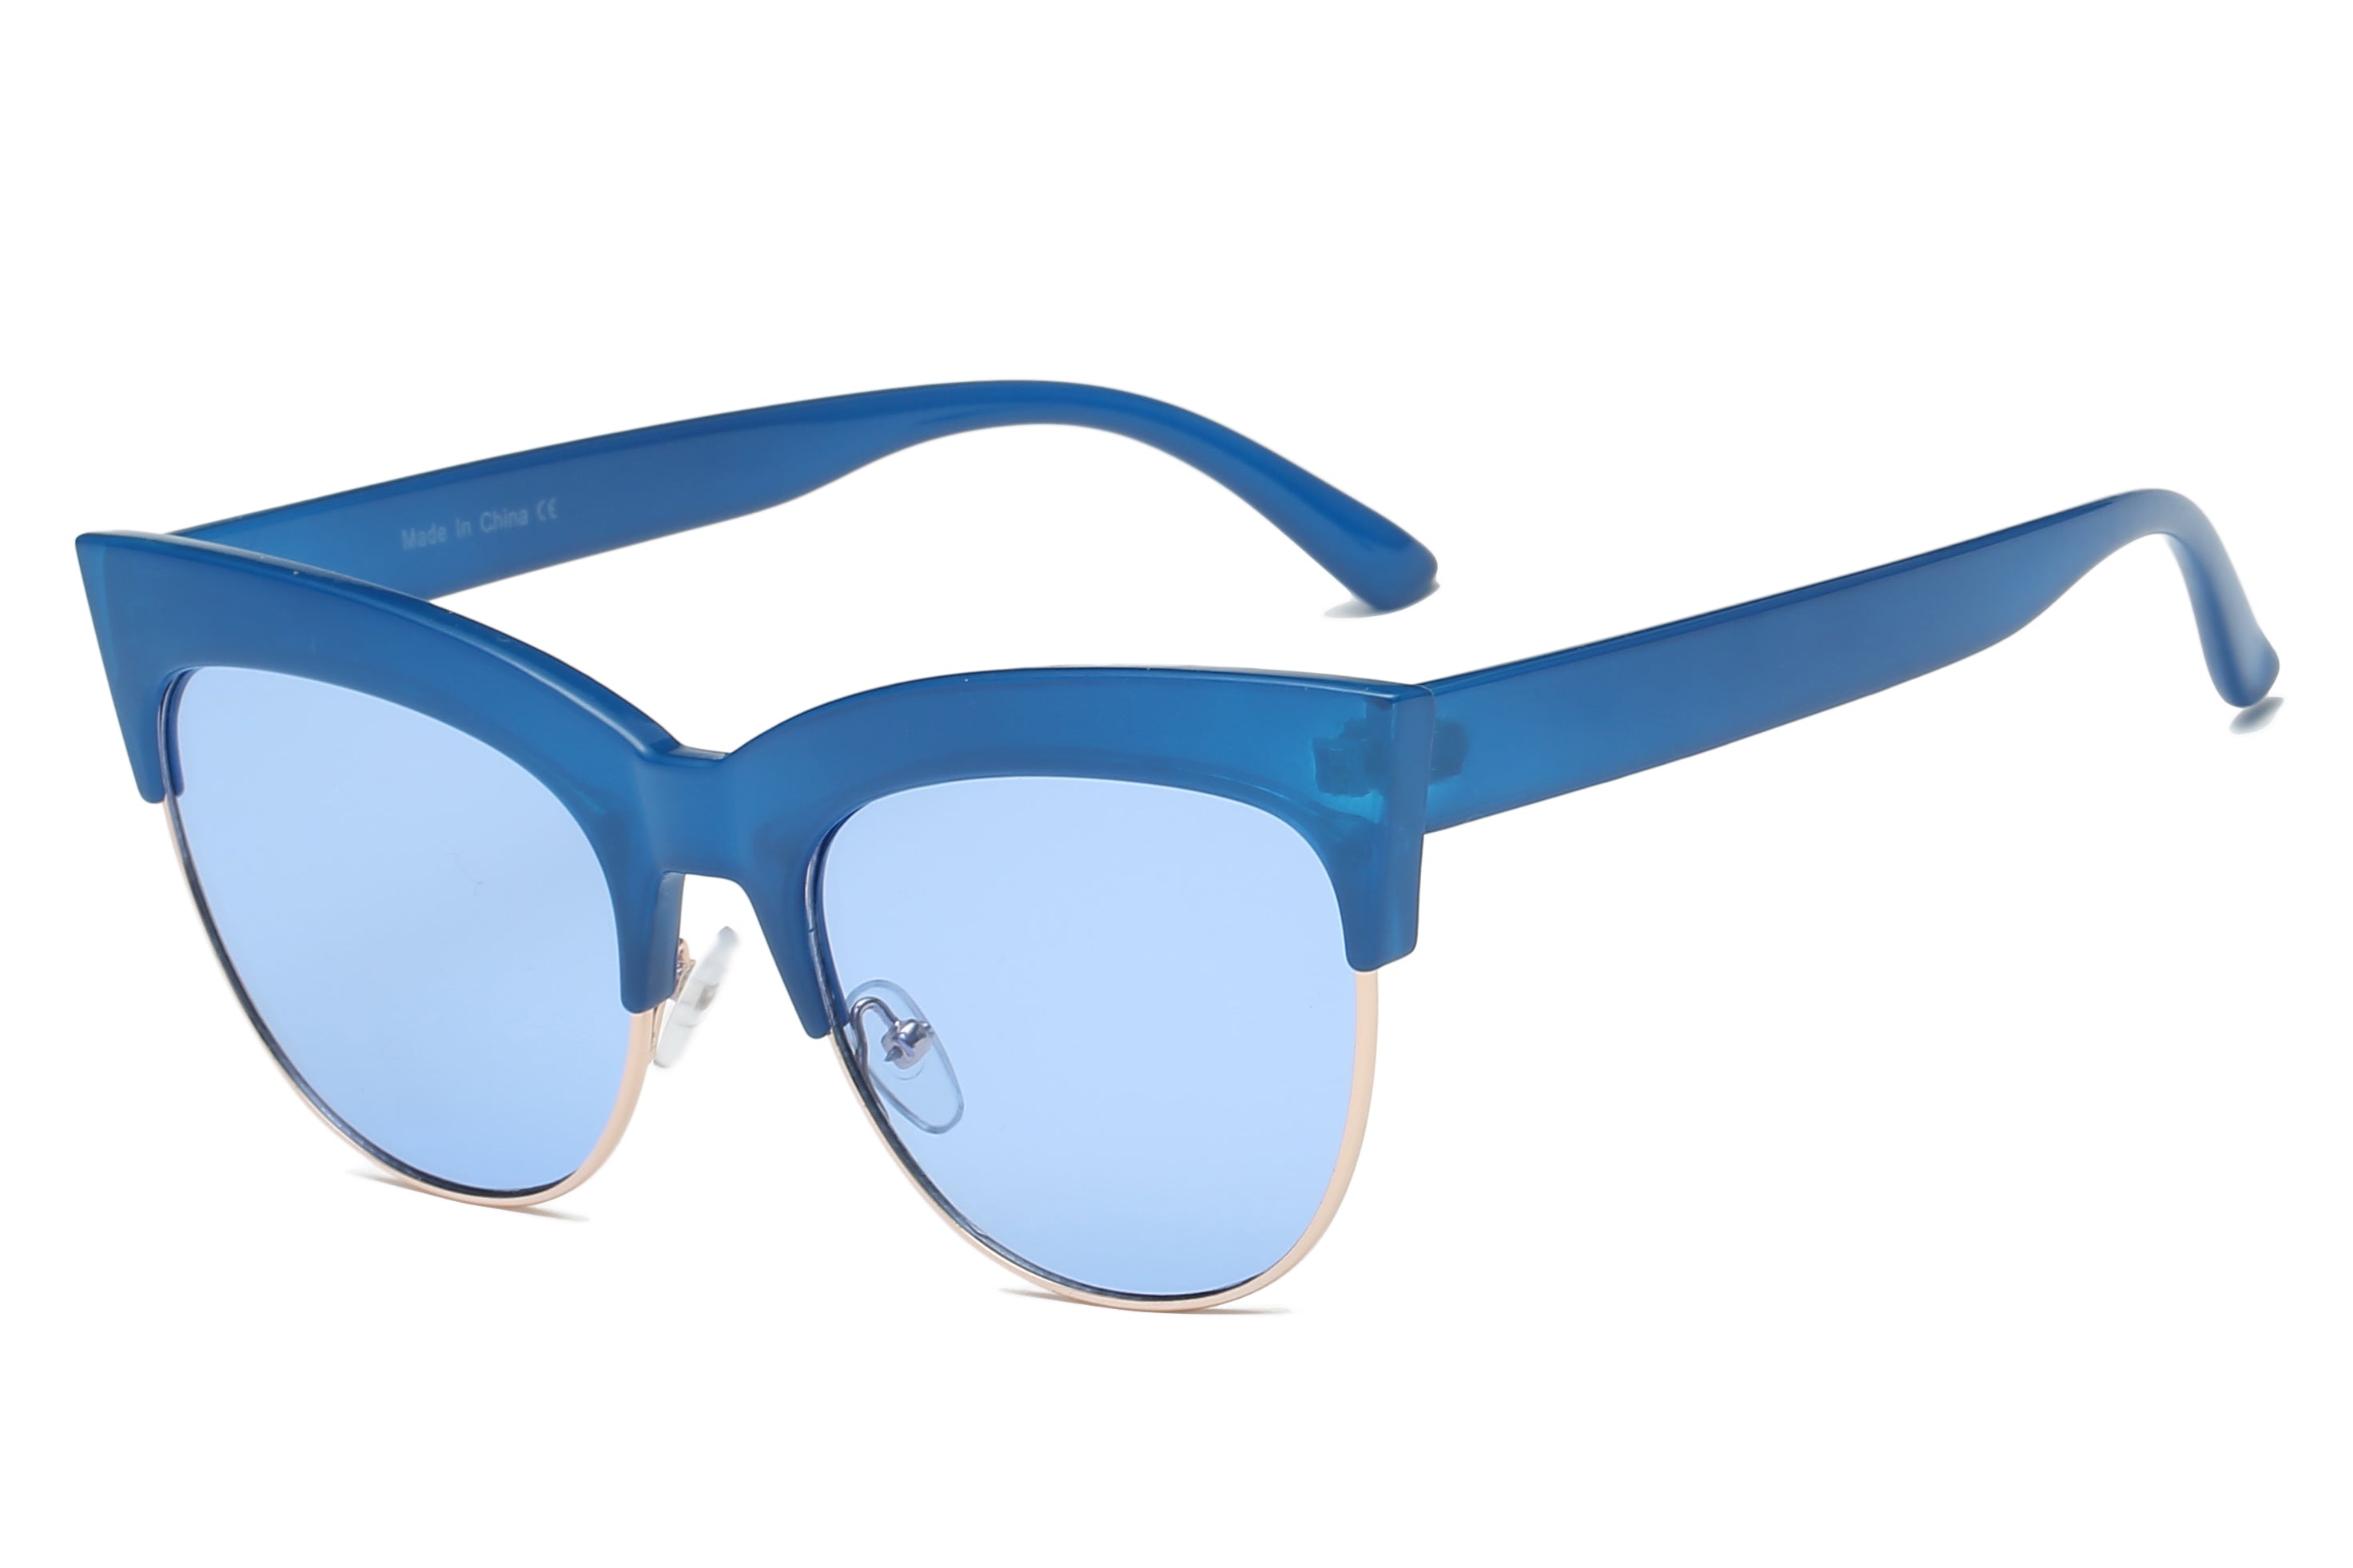 S2062 - Women Half Frame Round Cat Eye Sunglasses - Iris Fashion Inc. | Wholesale Sunglasses and Glasses